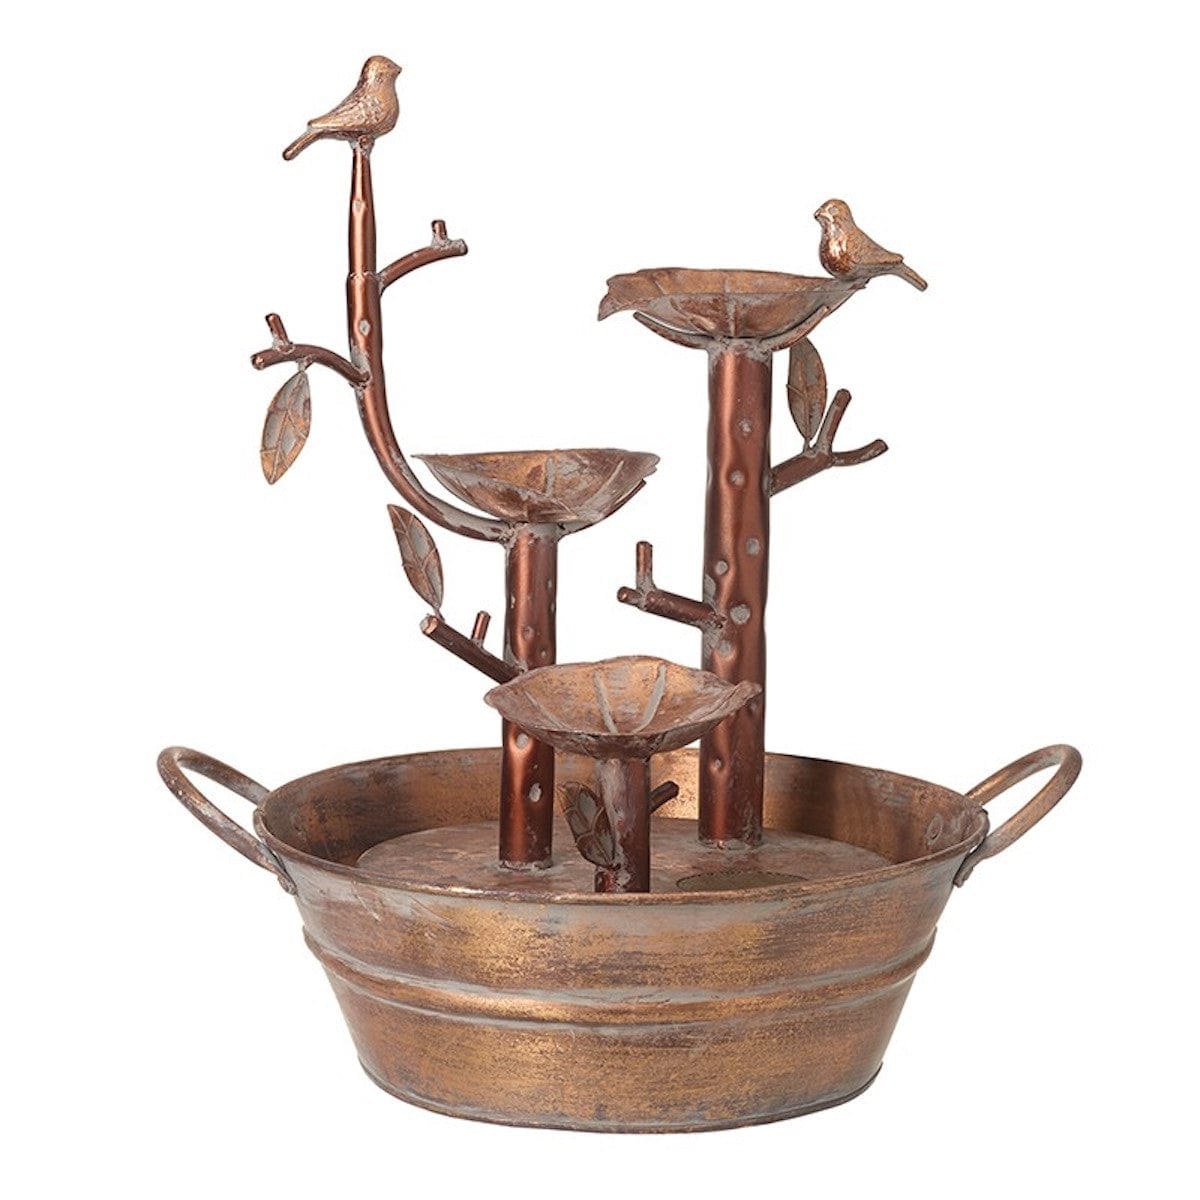 Heaven Sends Garden Accessories Bronze Bird Garden Ornament with Water Feature